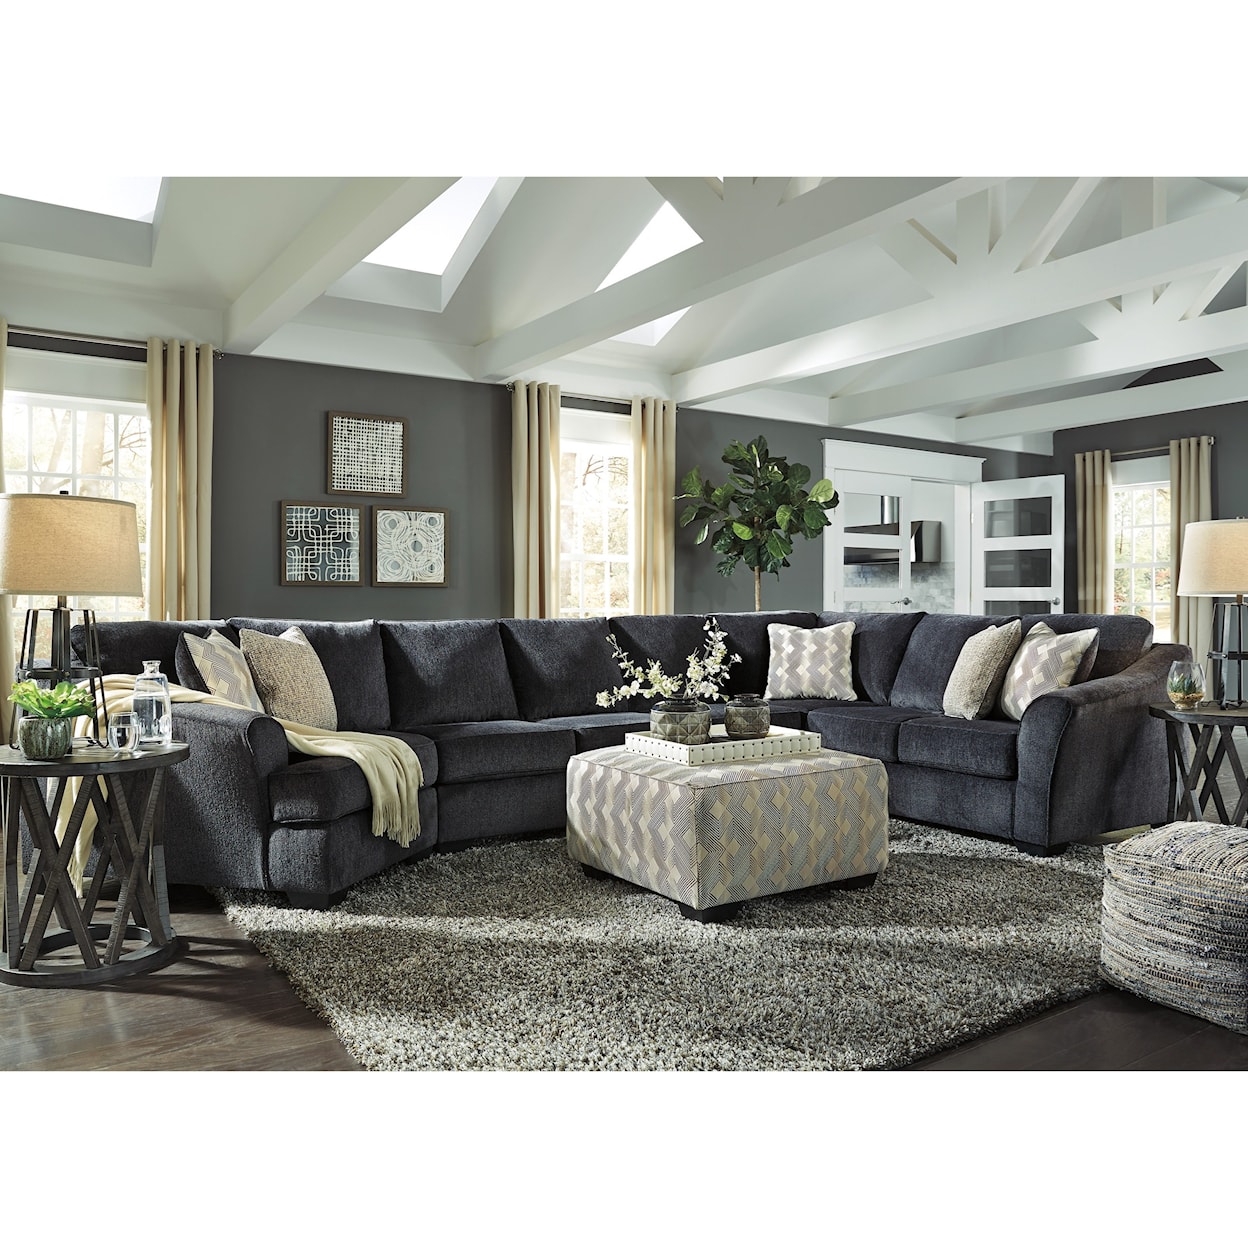 Ashley Furniture Signature Design Eltmann Stationary Living Room Group